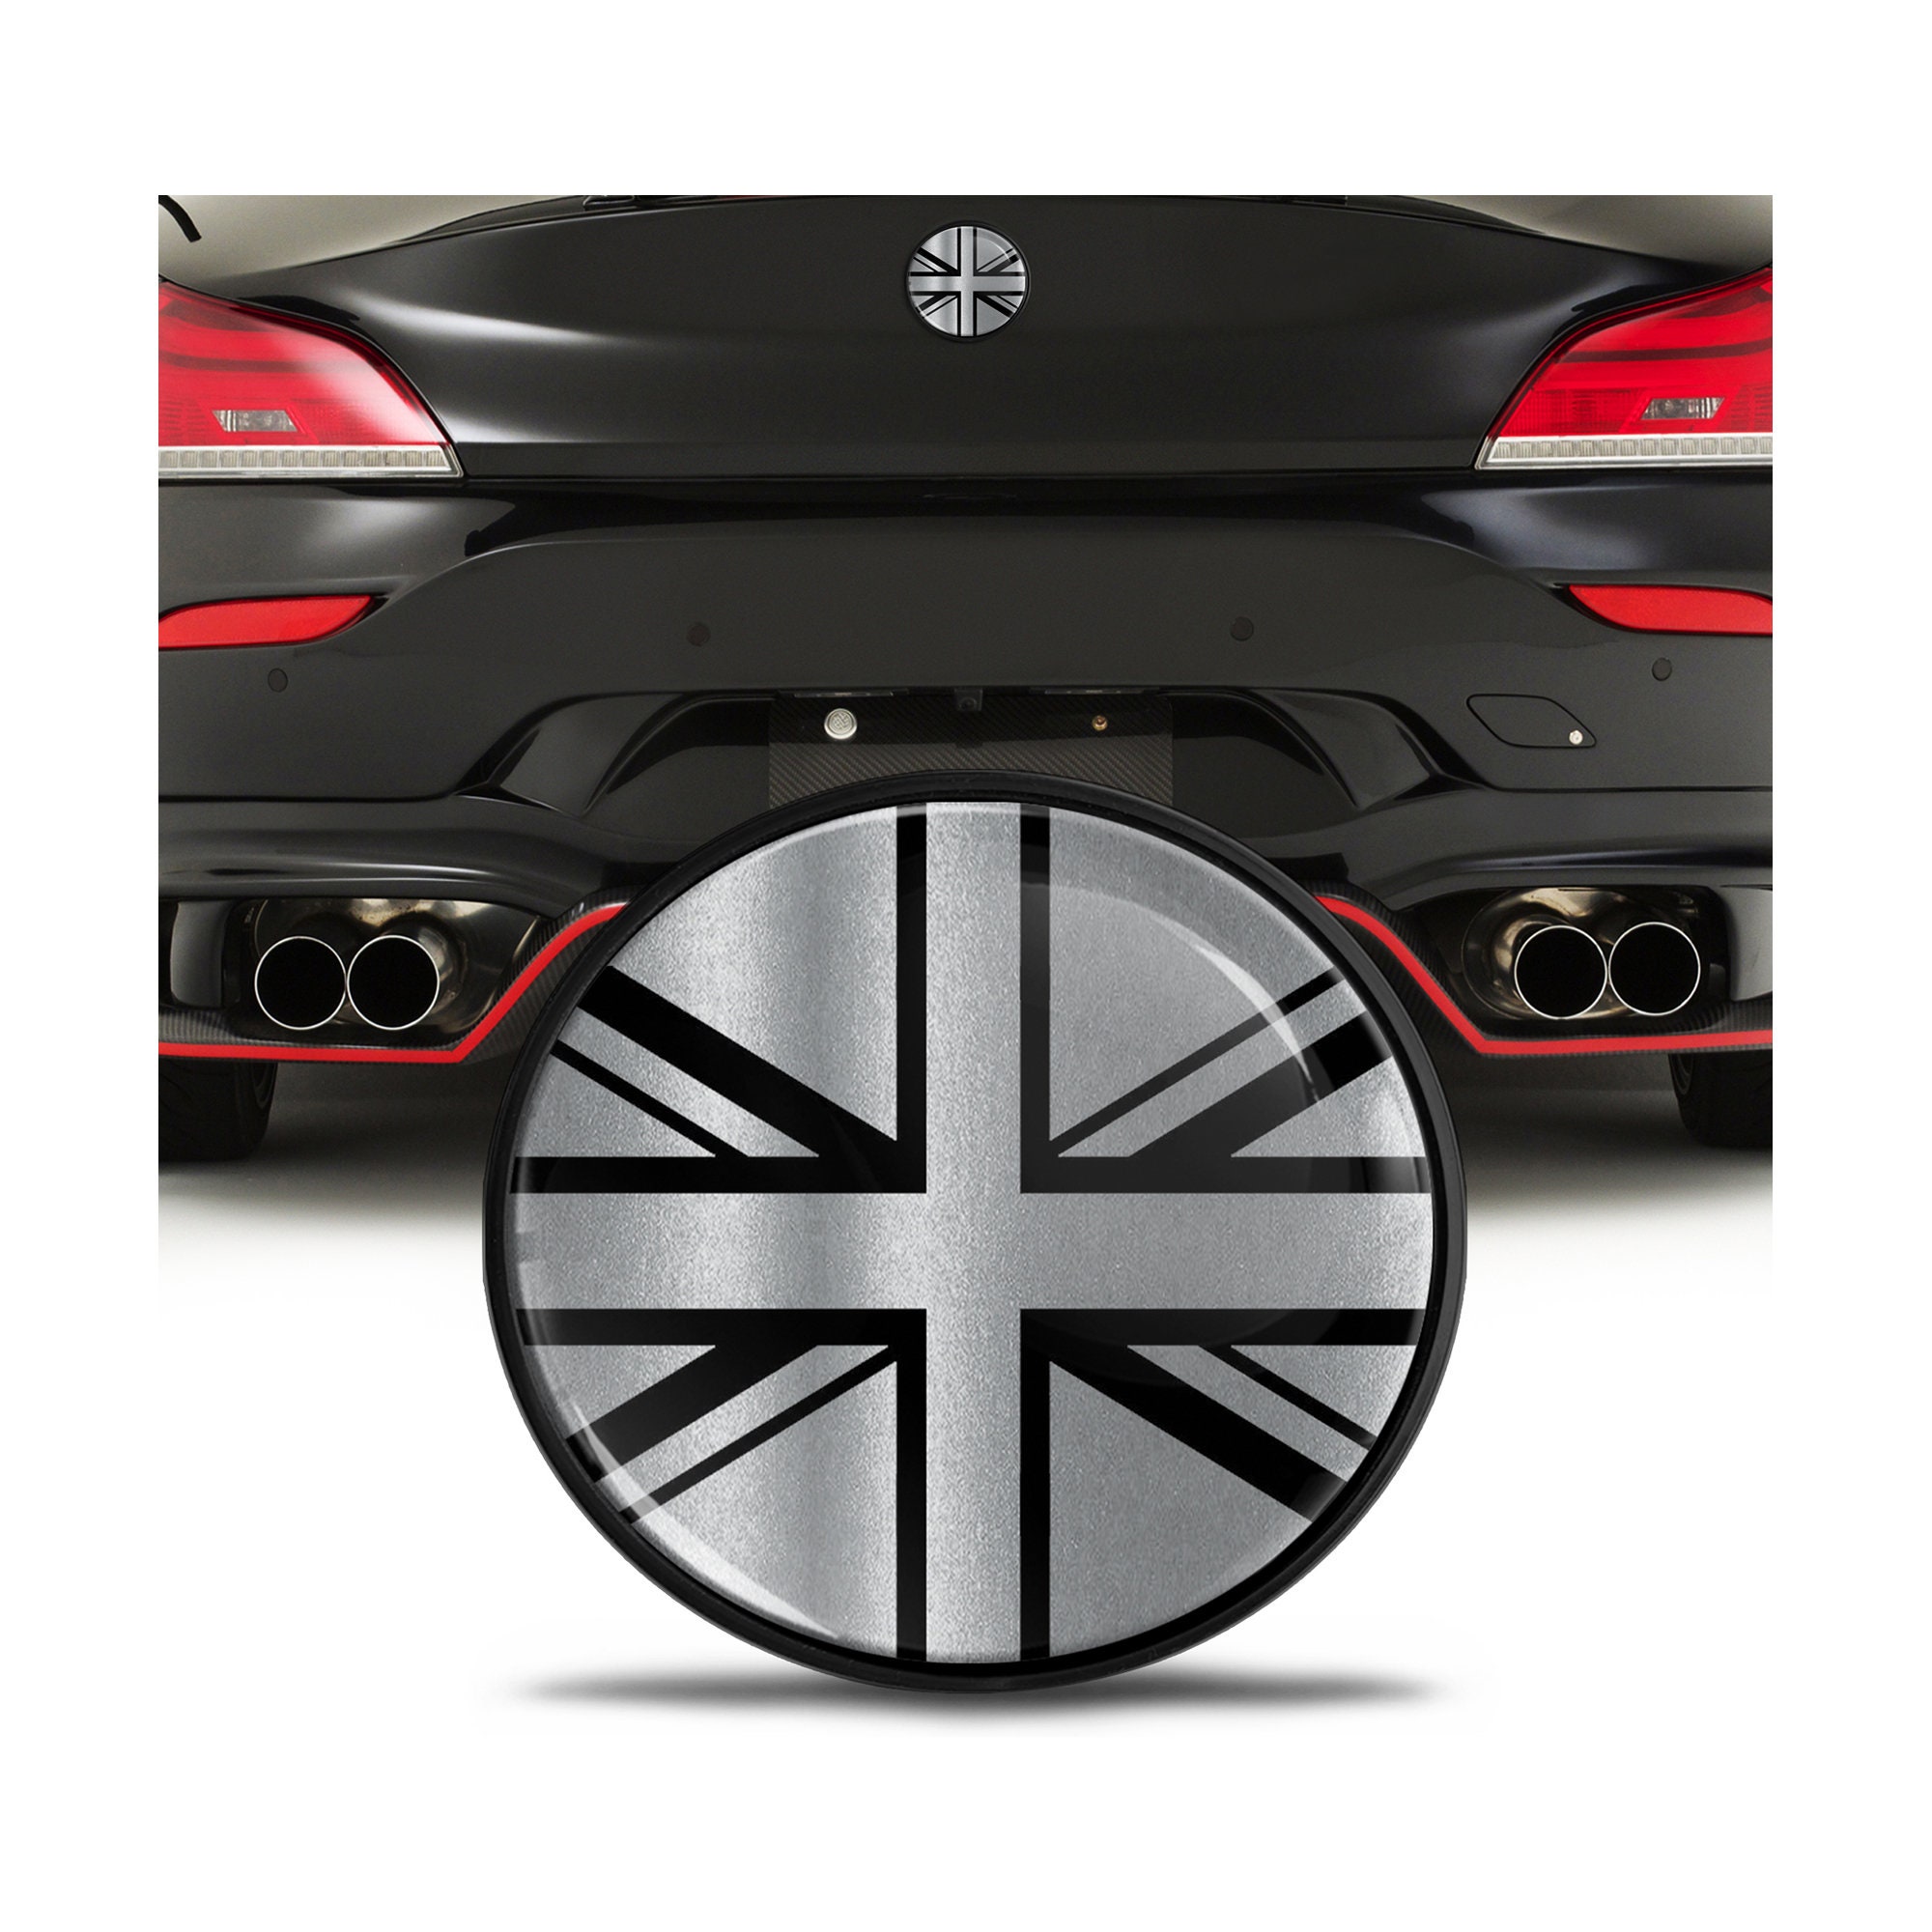 Emblema logo BMW 82mm (capó o maletero) versión adhesivo. BMW Original